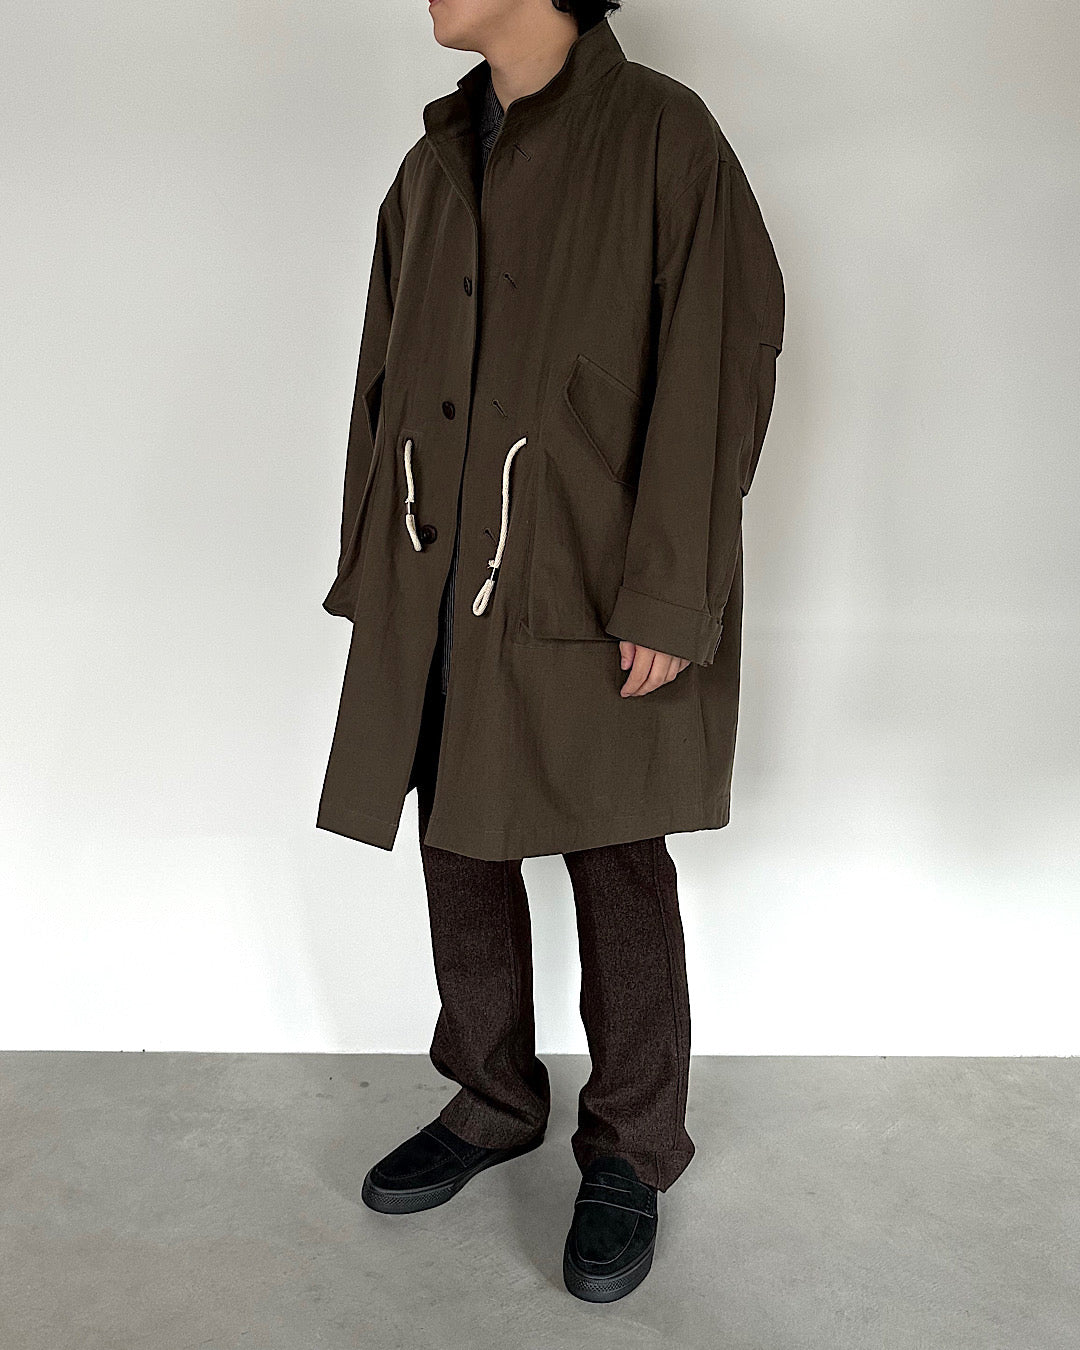 satou / "hatake mods coat" - brown